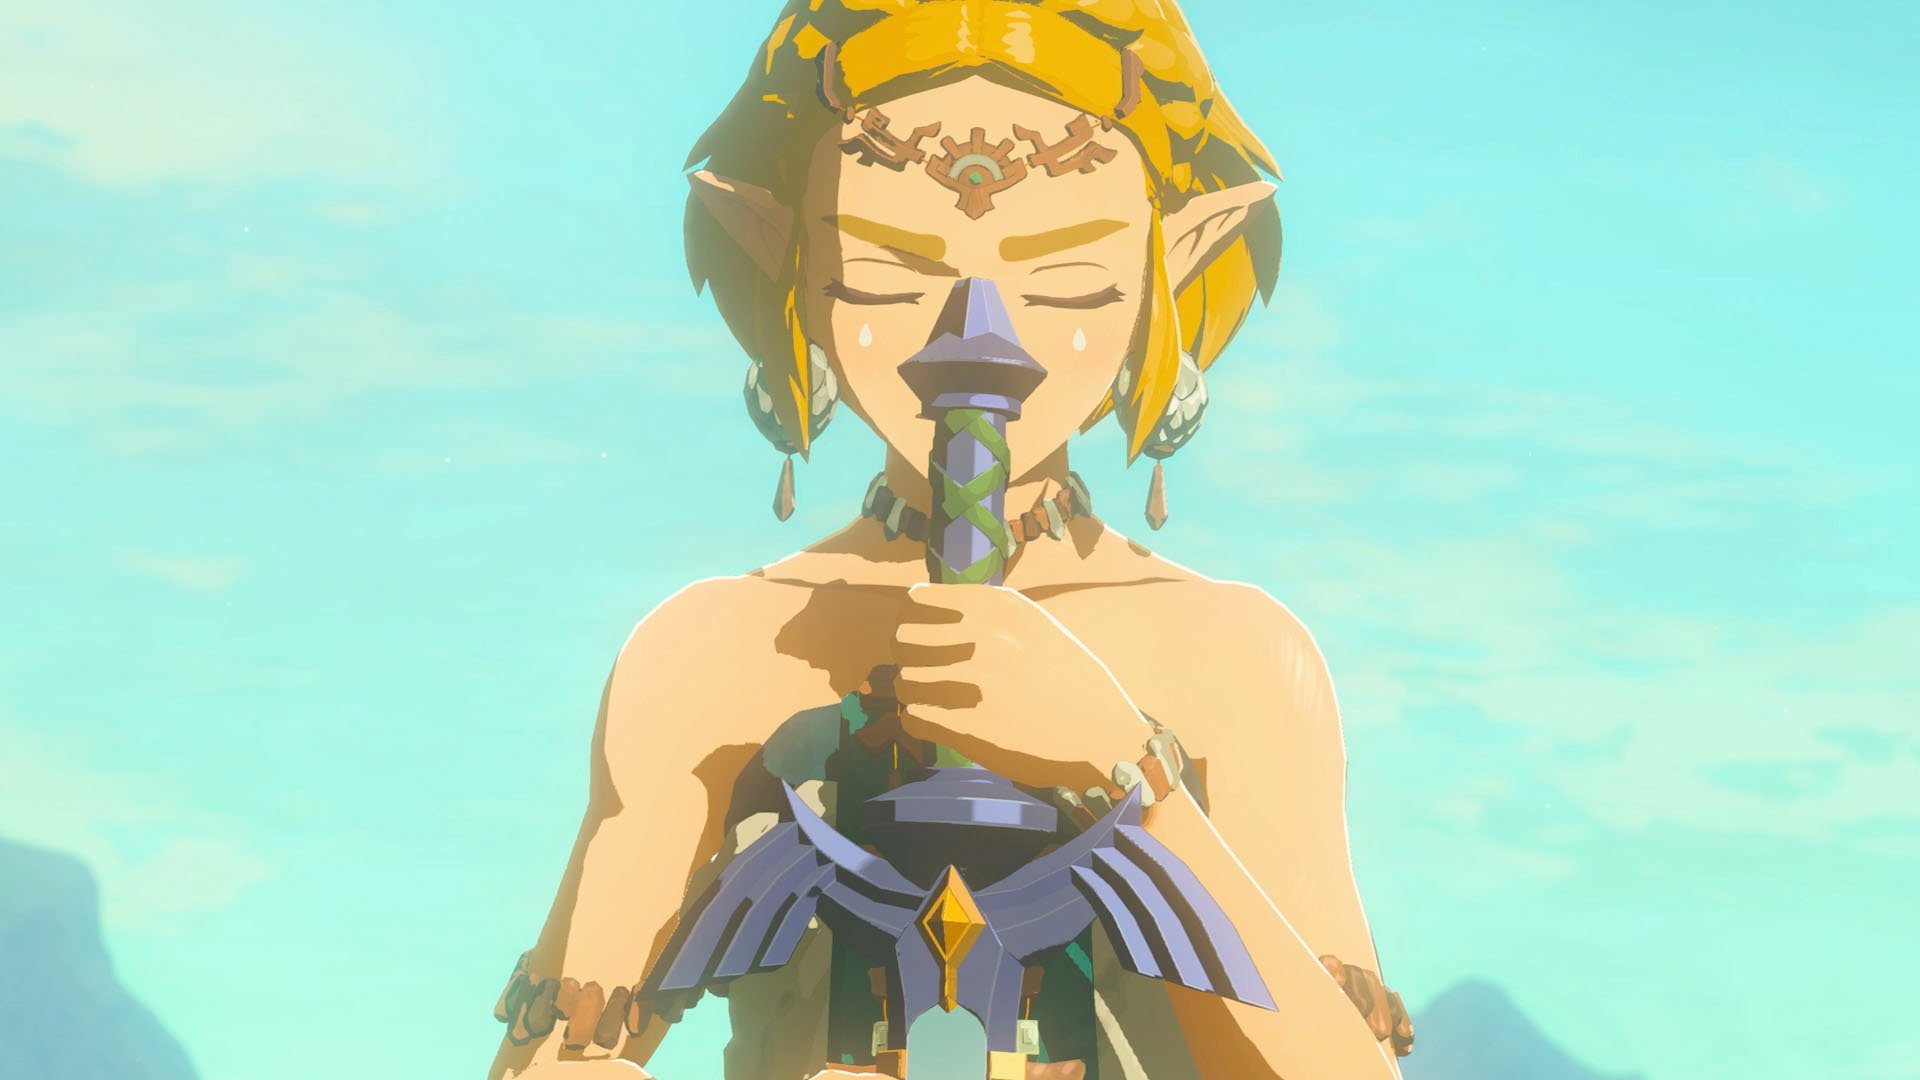 The Legend of Zelda: Kingdom Tears Switch of the Nintendo